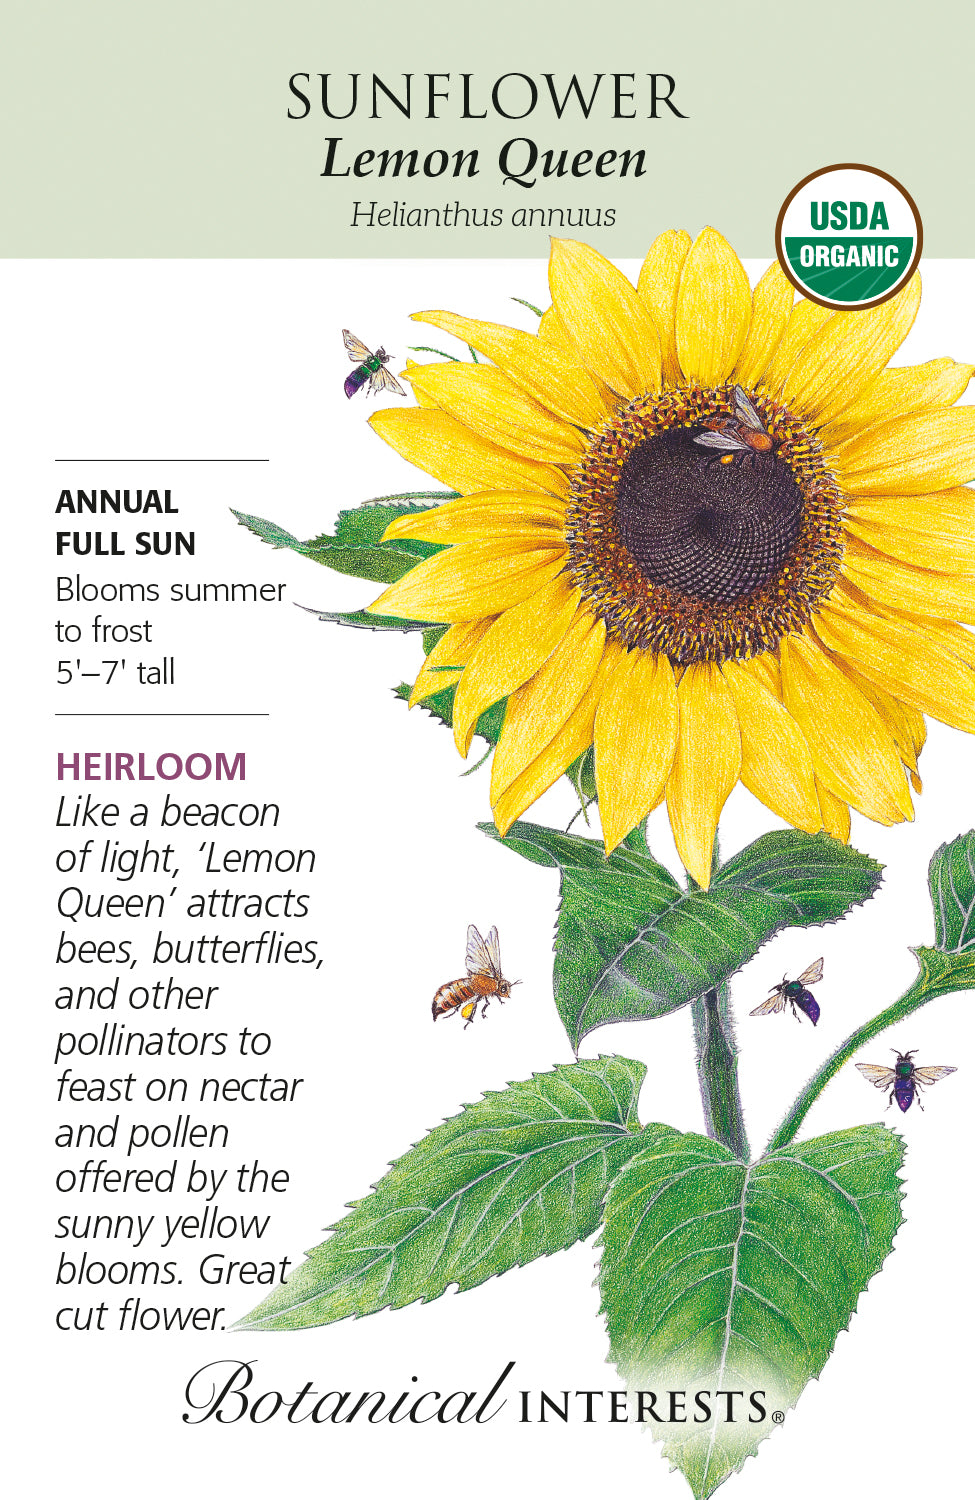 Sunflower - Lemon Queen Organic